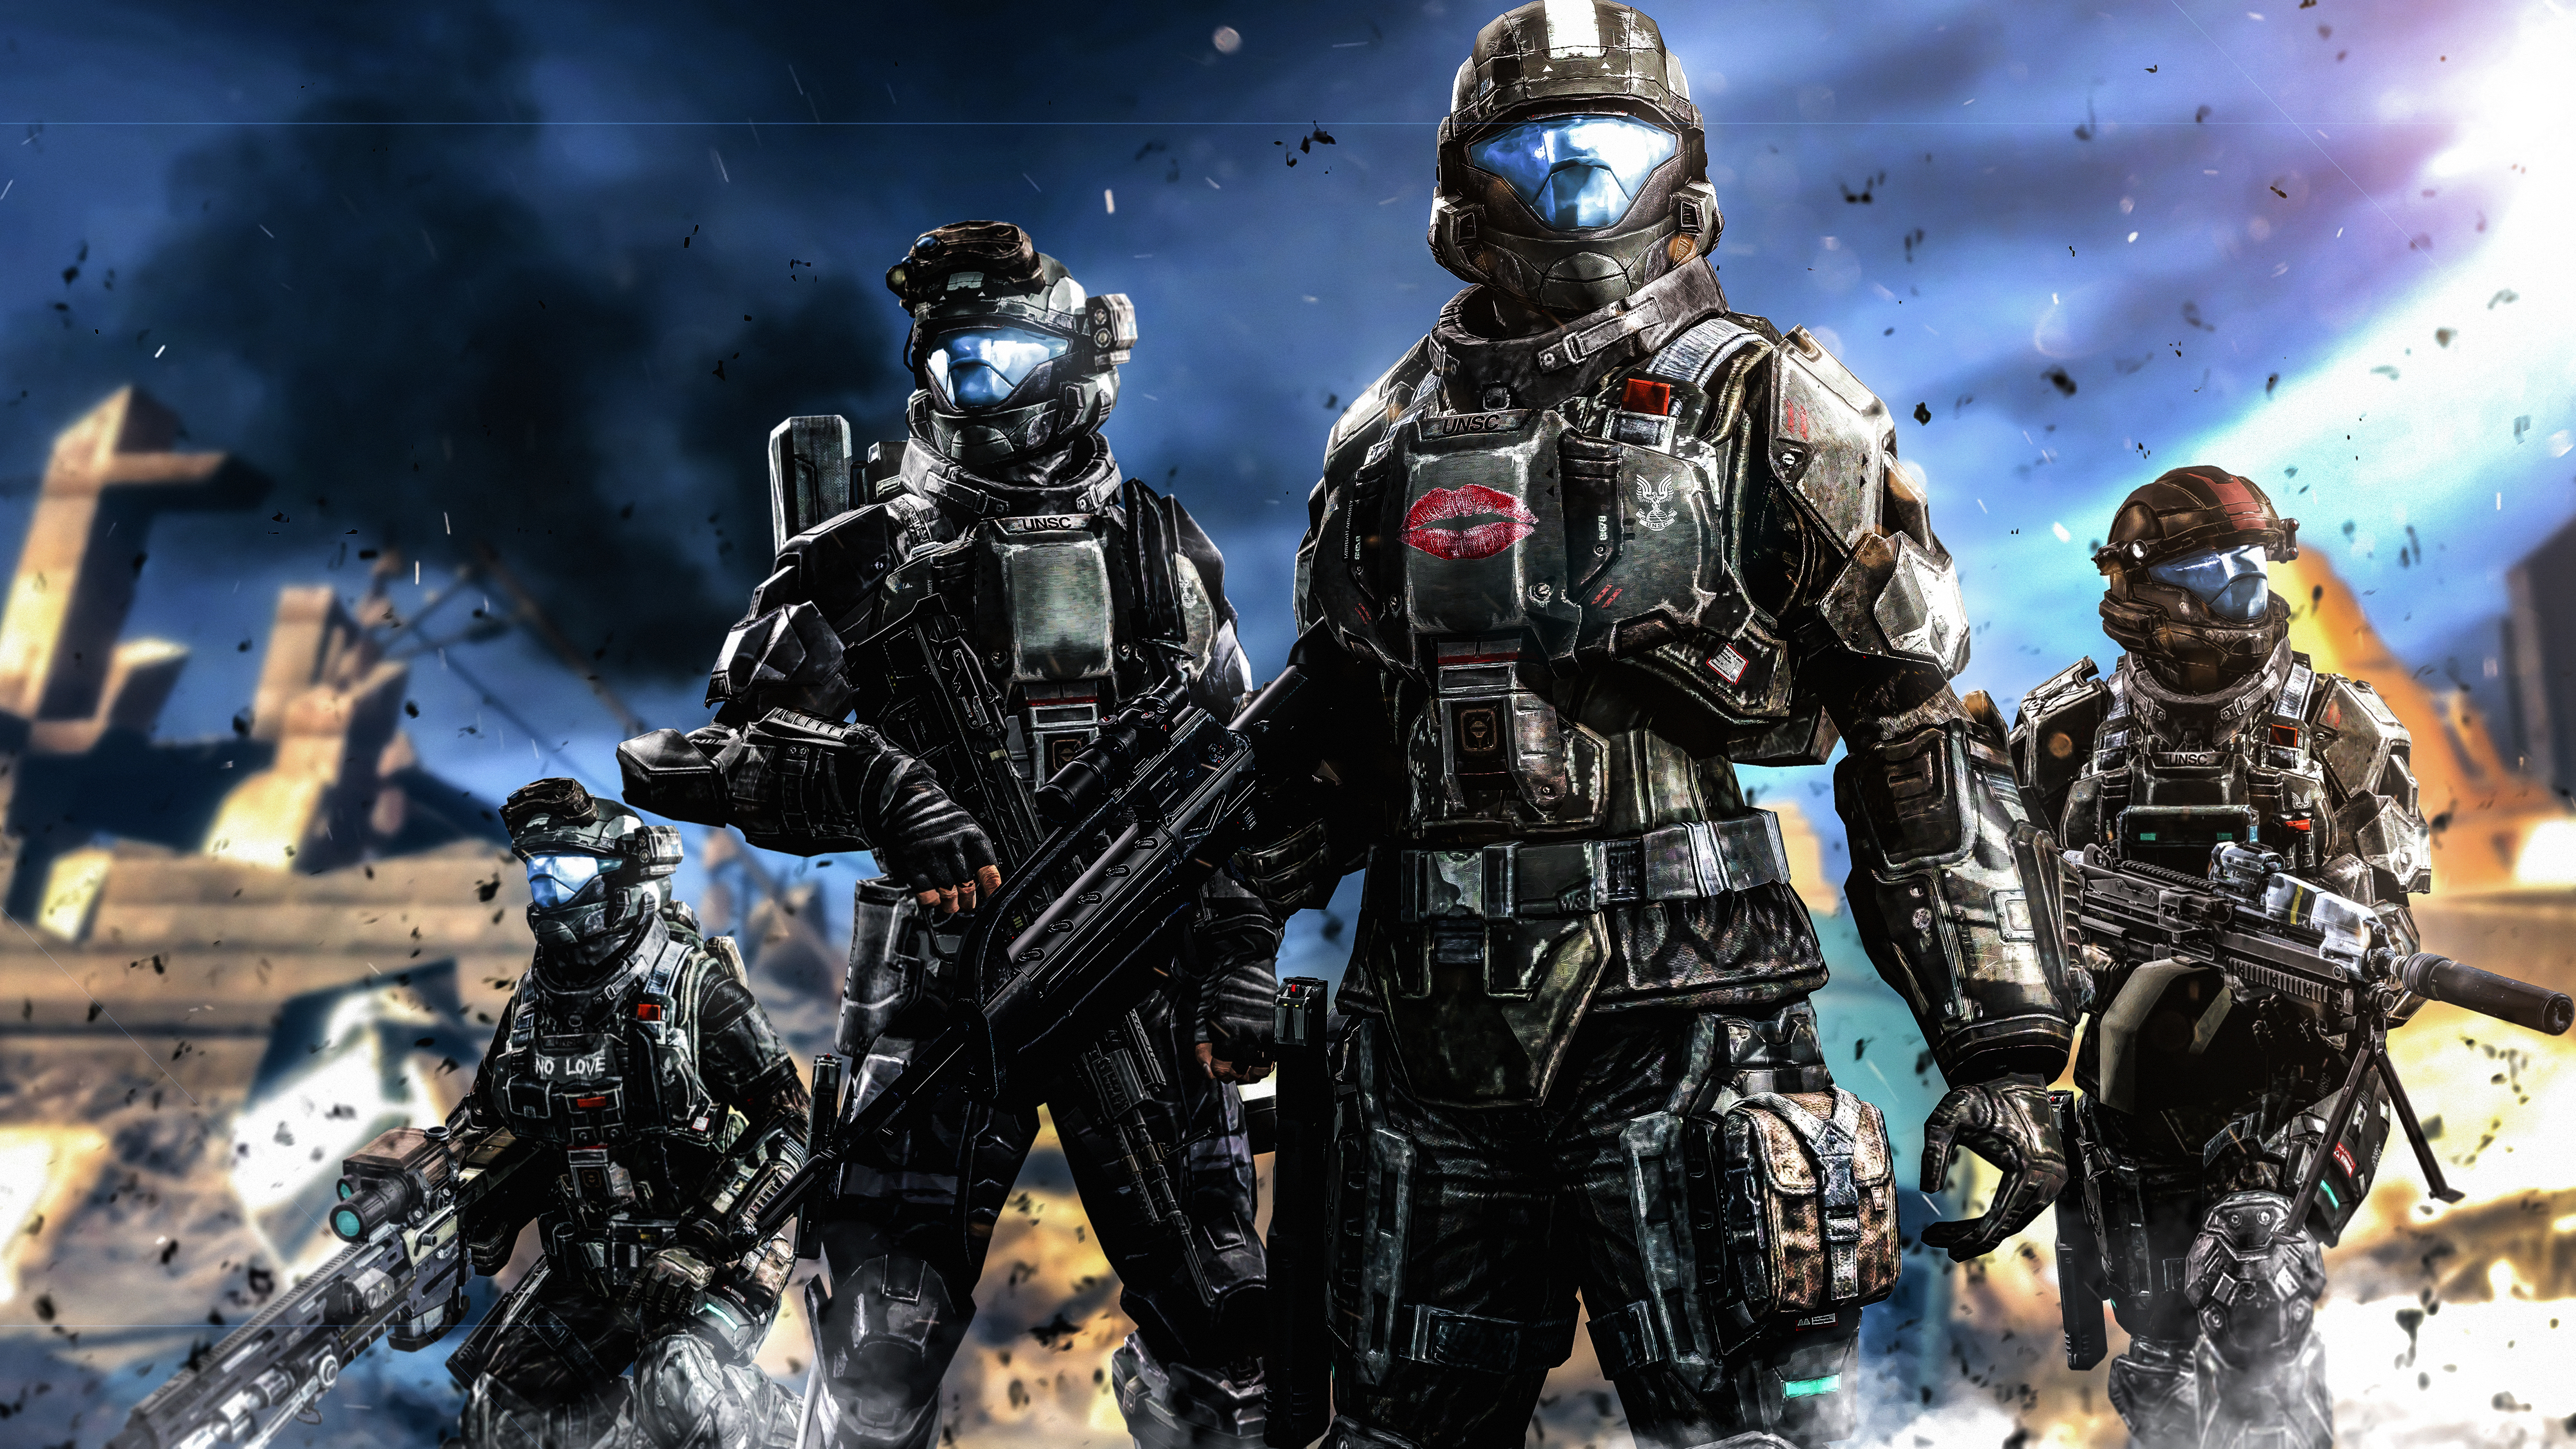 Video Games Halo Futuristic Armor Video Game Art Digital Art Halo 3 ODST War Explosion ODST Sniper R 4608x2592